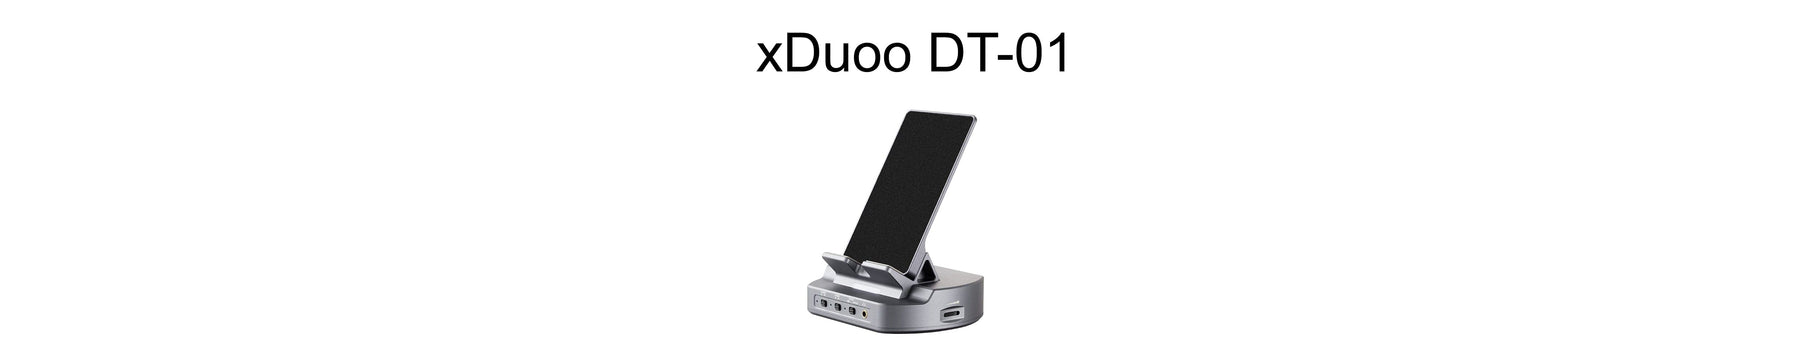 xDuoo DT-01 HiFi Turntable for Smartphones